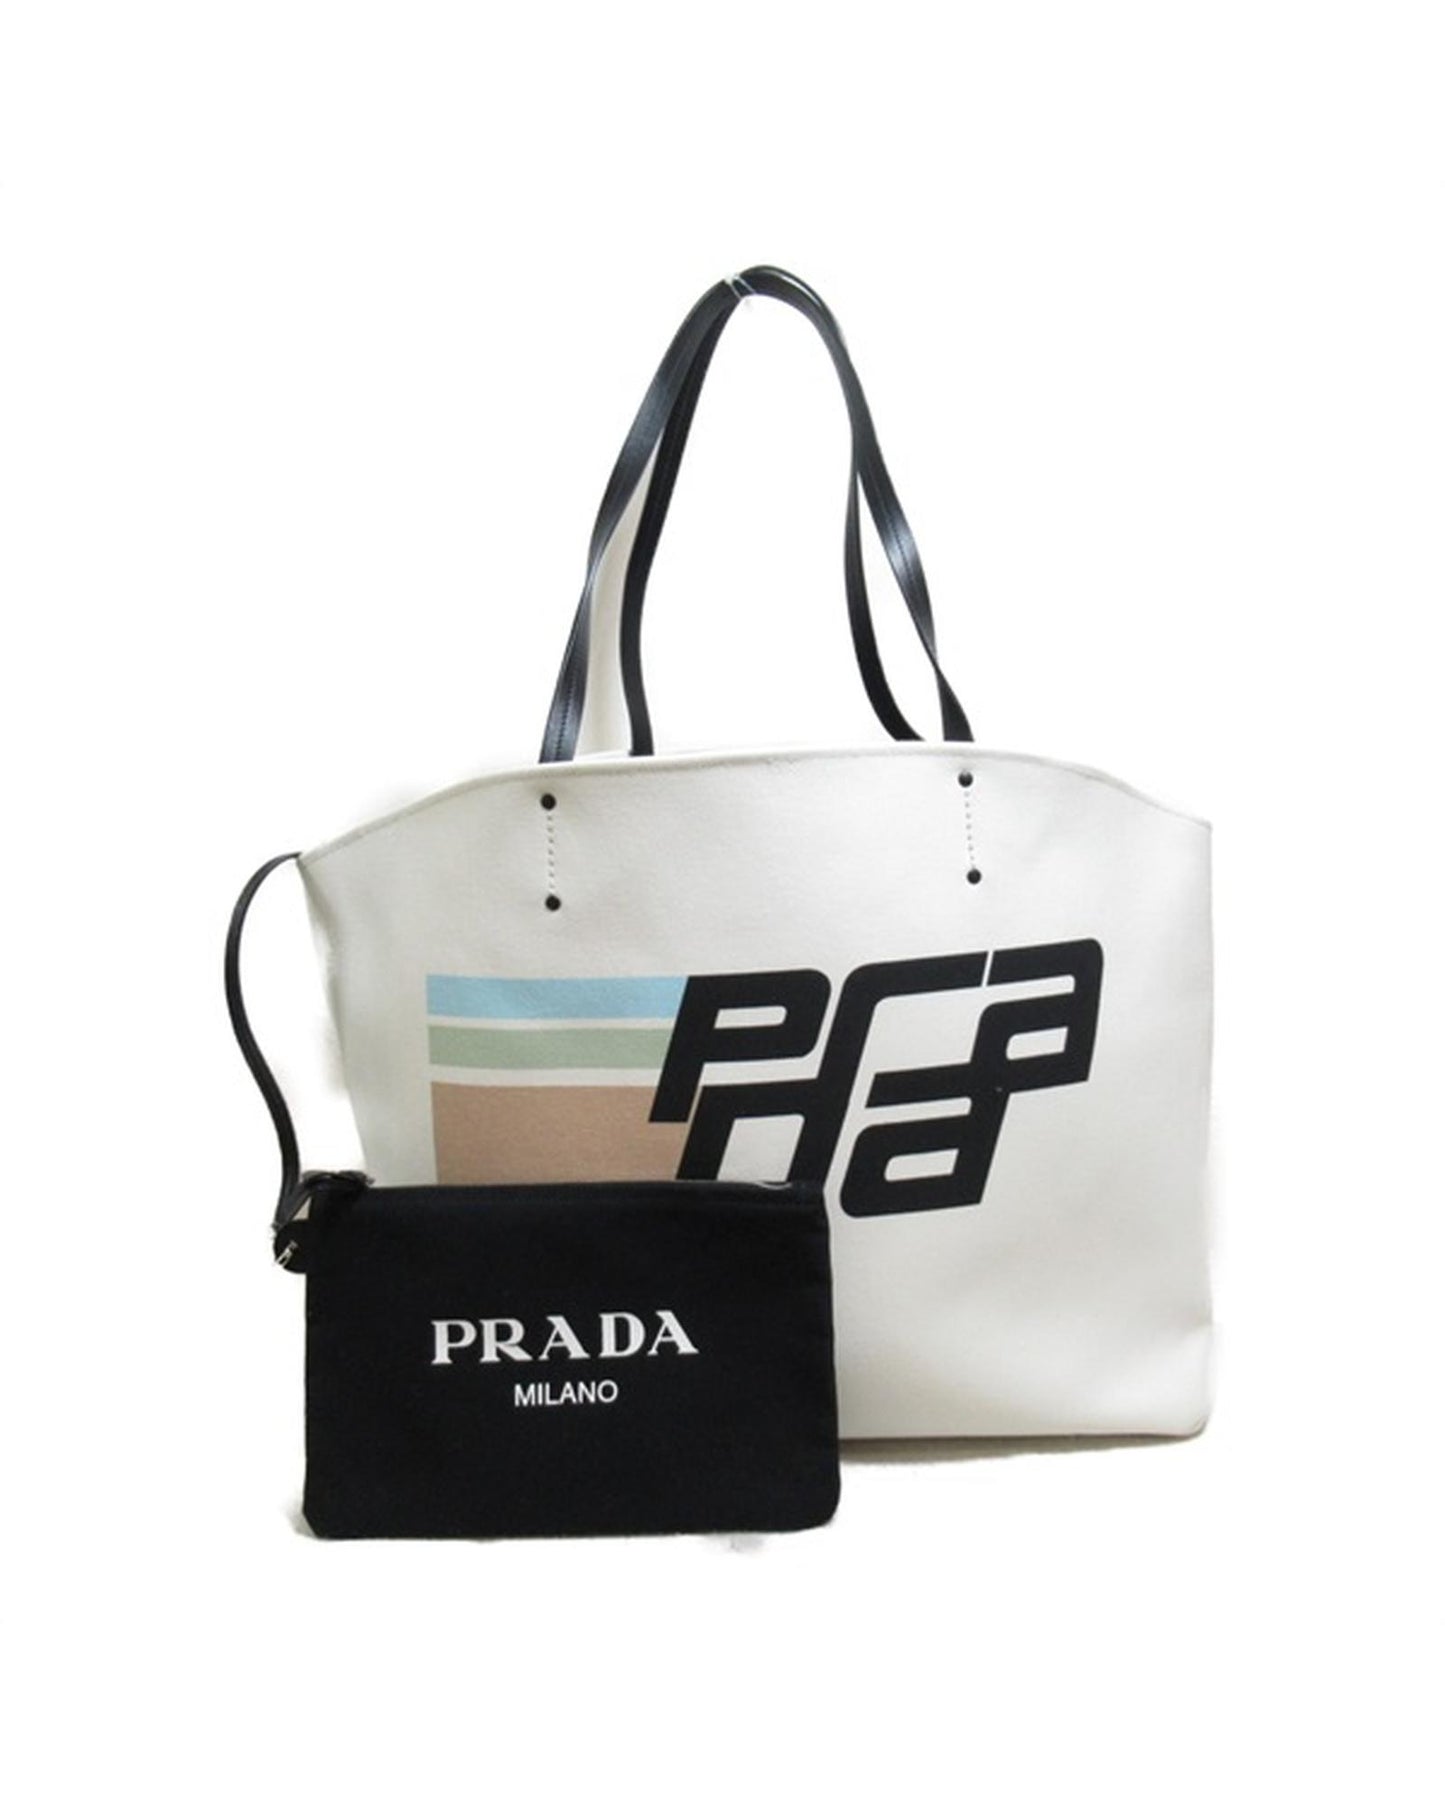 Prada Women's Printed Canvas Tote Bag in White